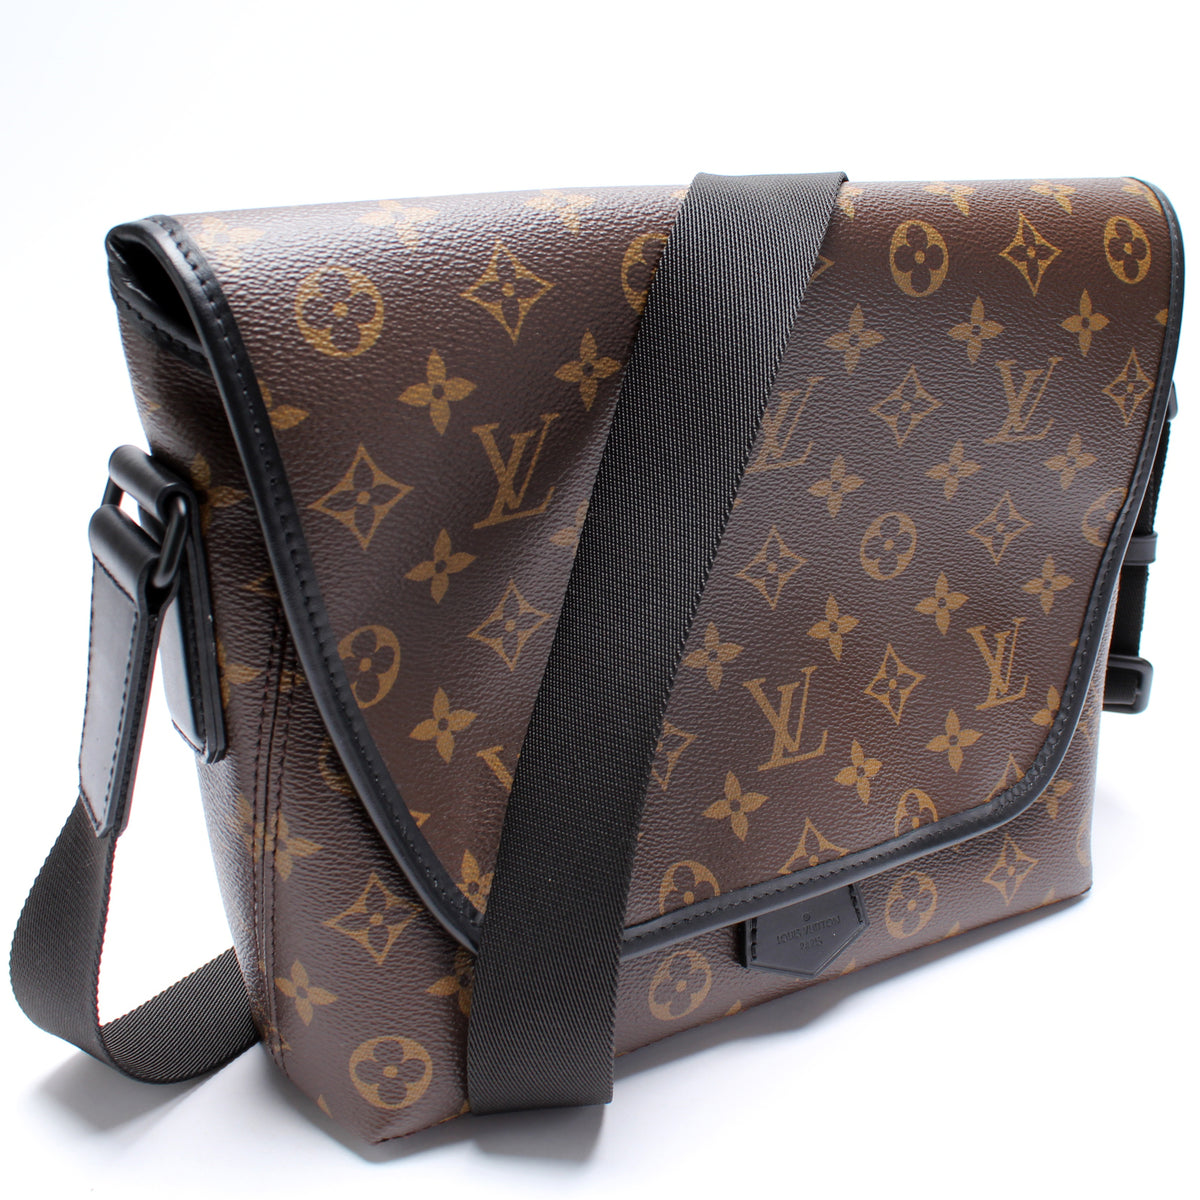 Shop Louis Vuitton Monogram Magnetic Messenger Bag w/ Box Louis Vuitton .  Today, you can shop the latest trends and brands online